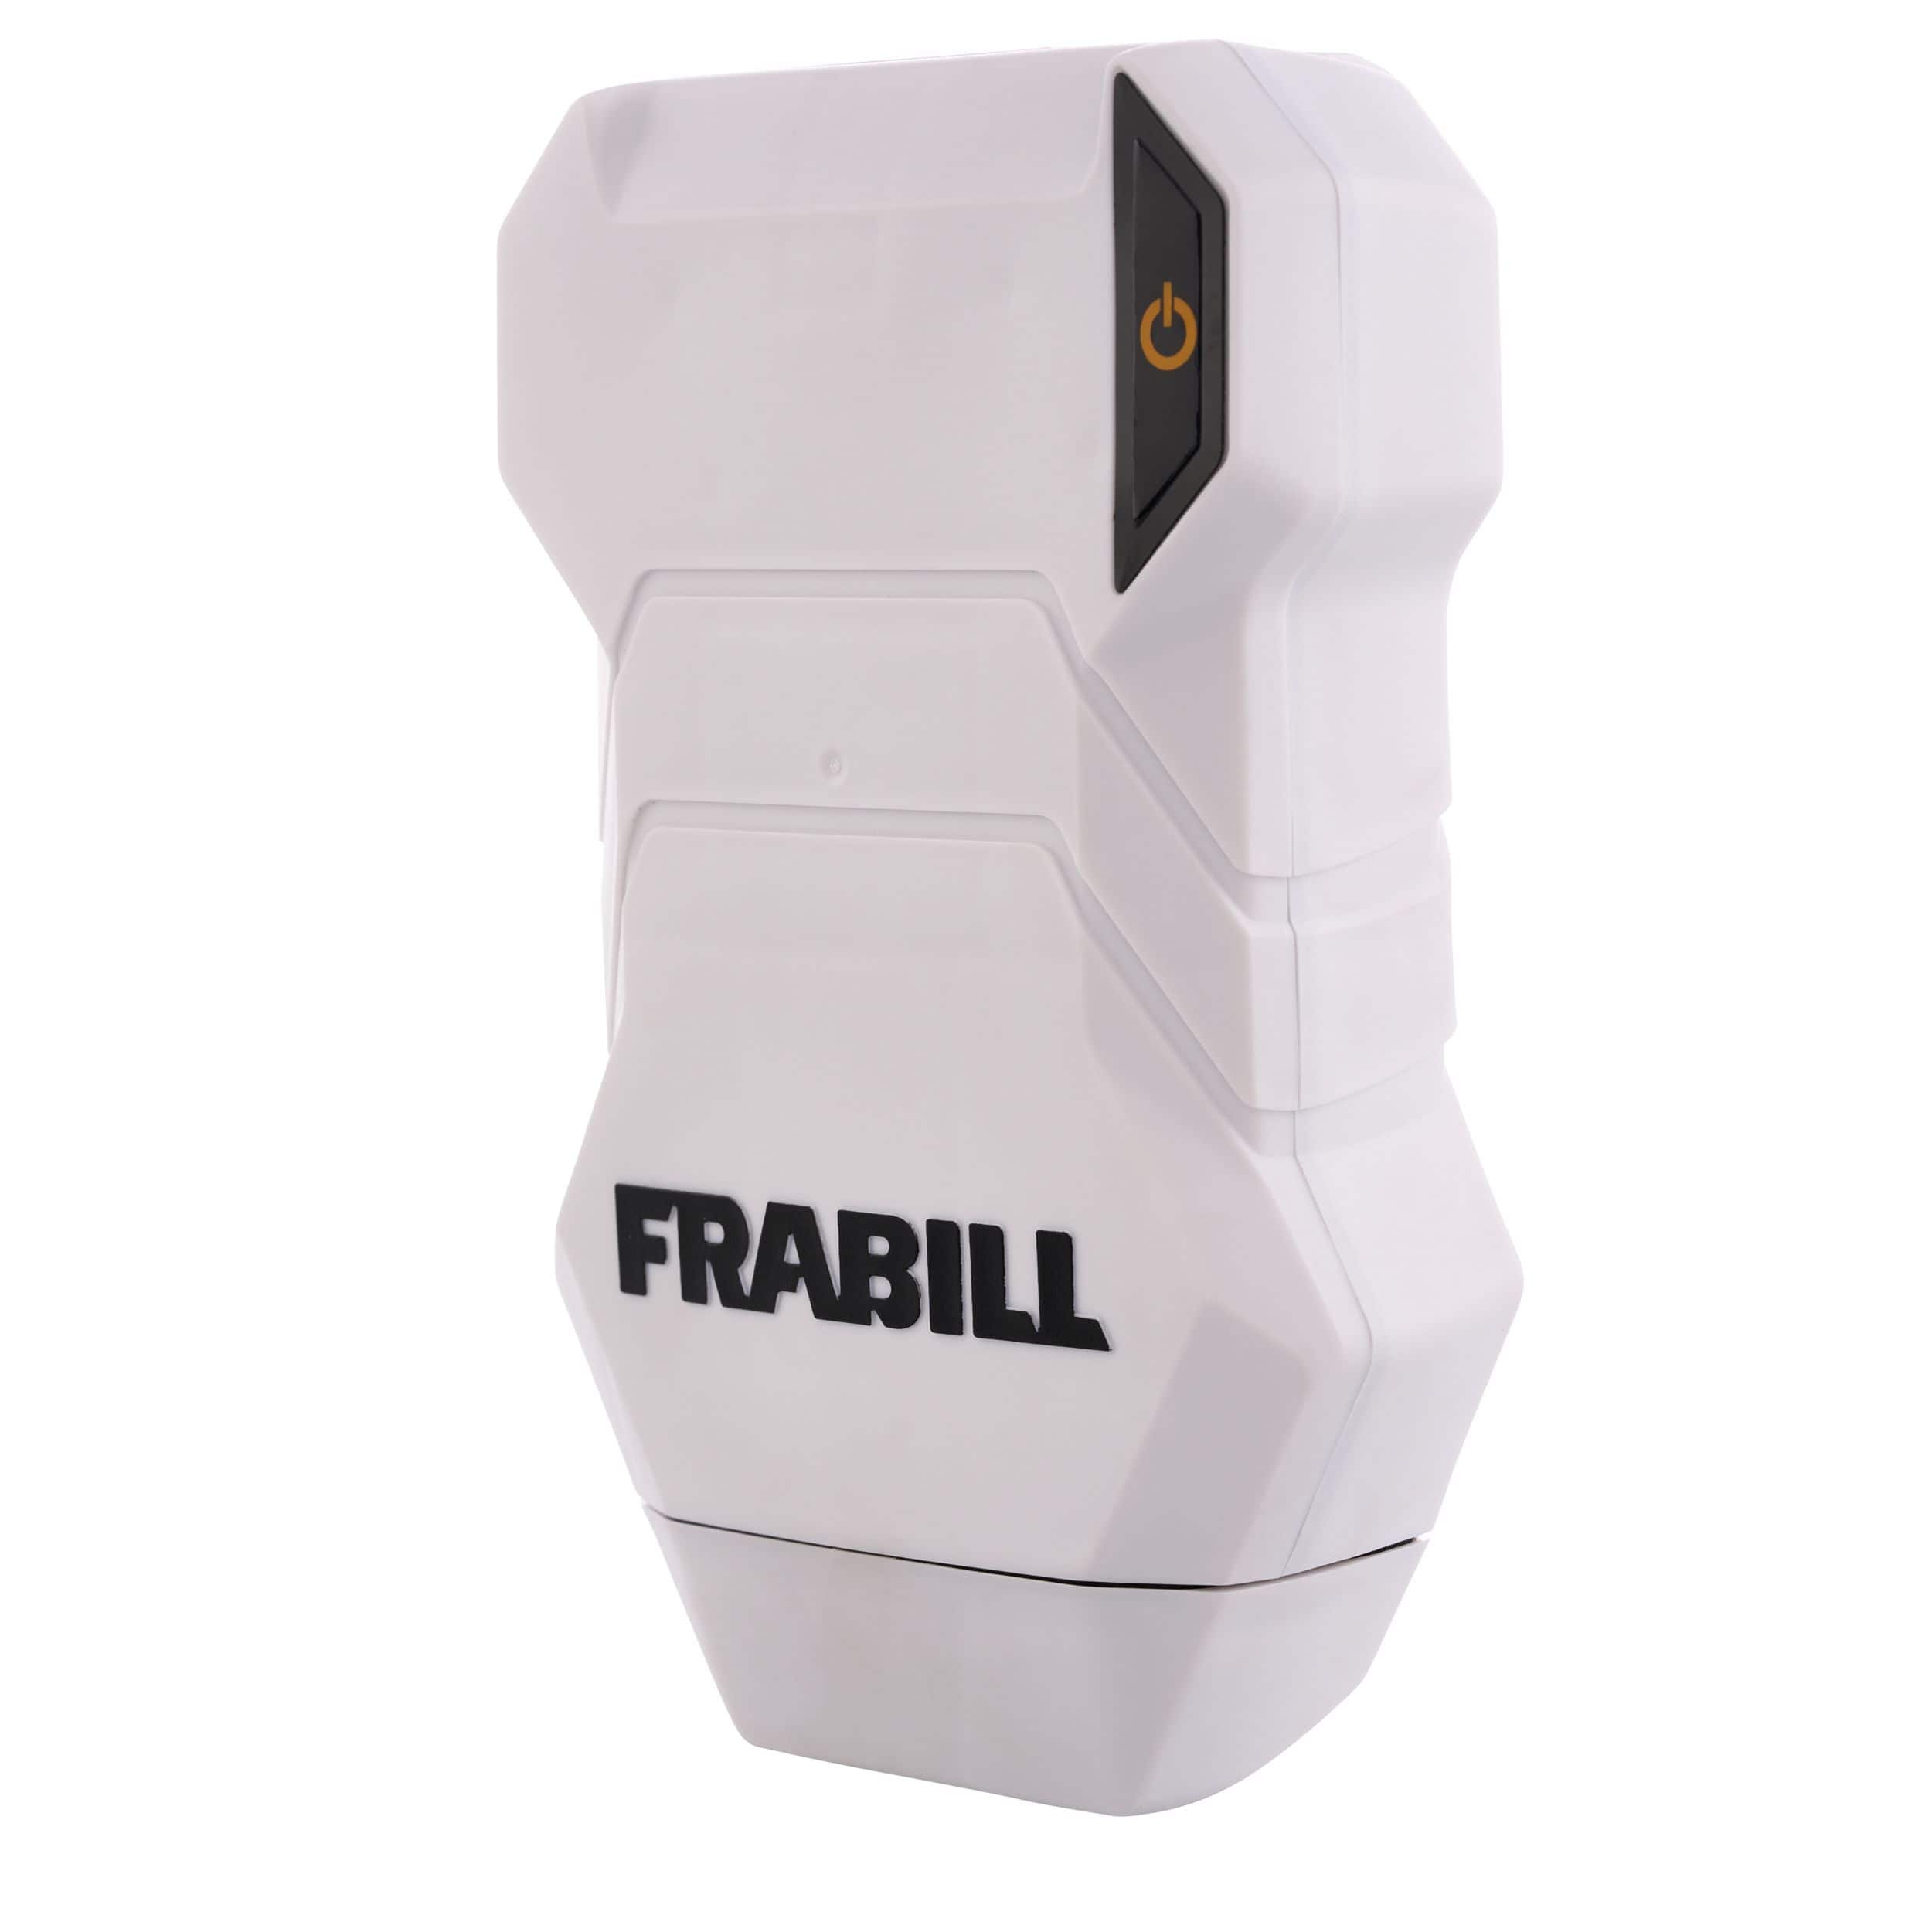 Frabill Whisper Quiet Aerator, Water-resistant Gasket Design, Plastic